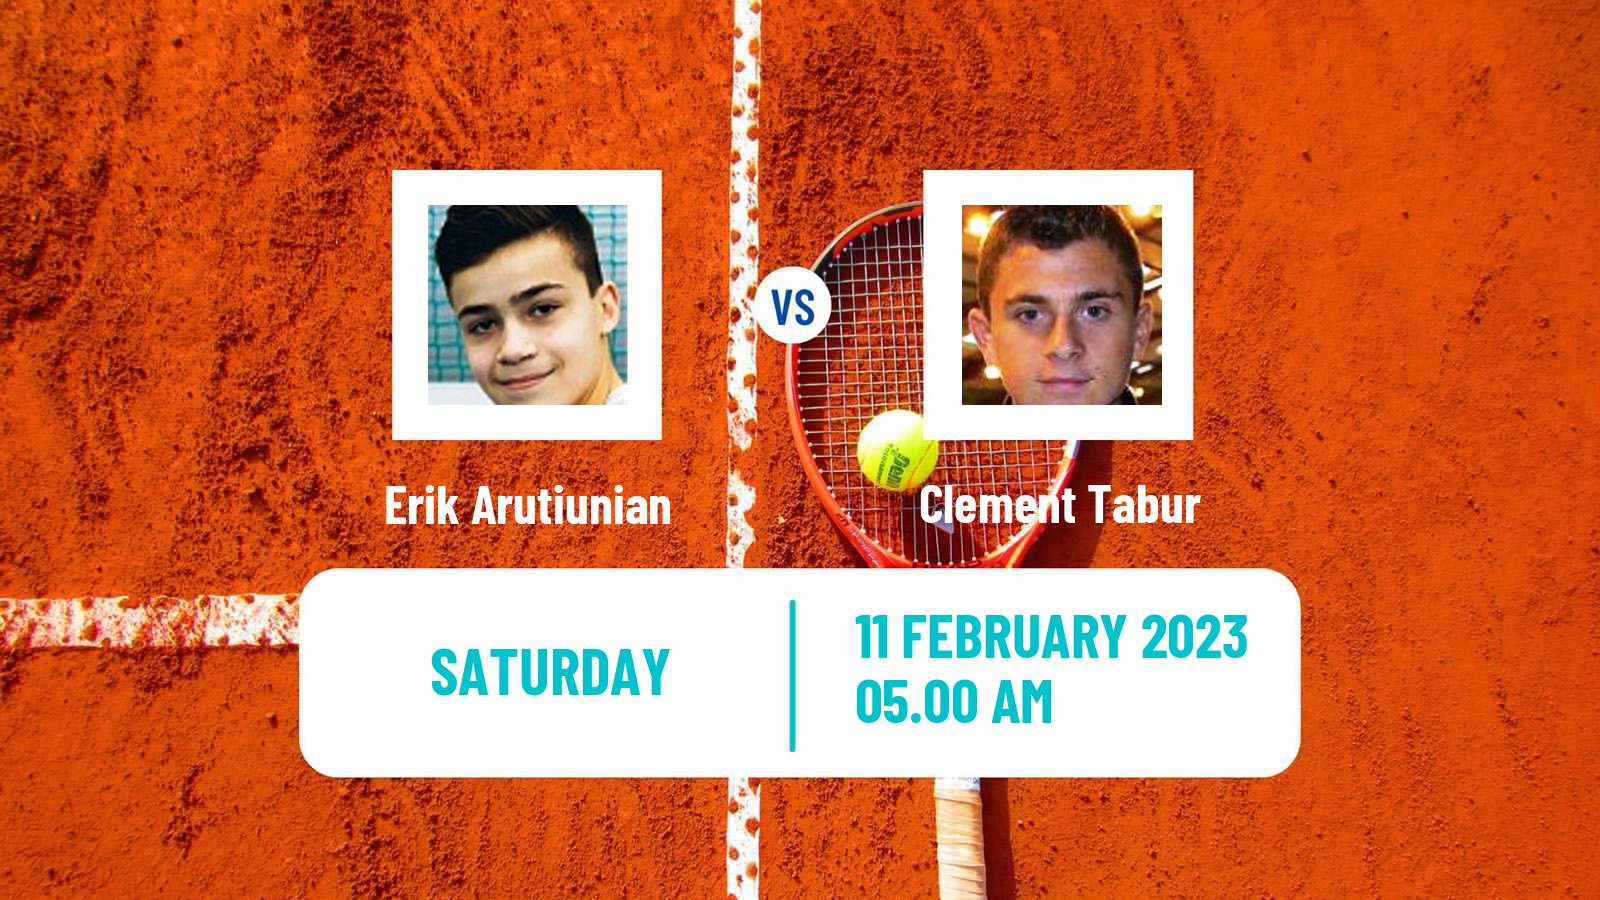 Tennis ITF Tournaments Erik Arutiunian - Clement Tabur